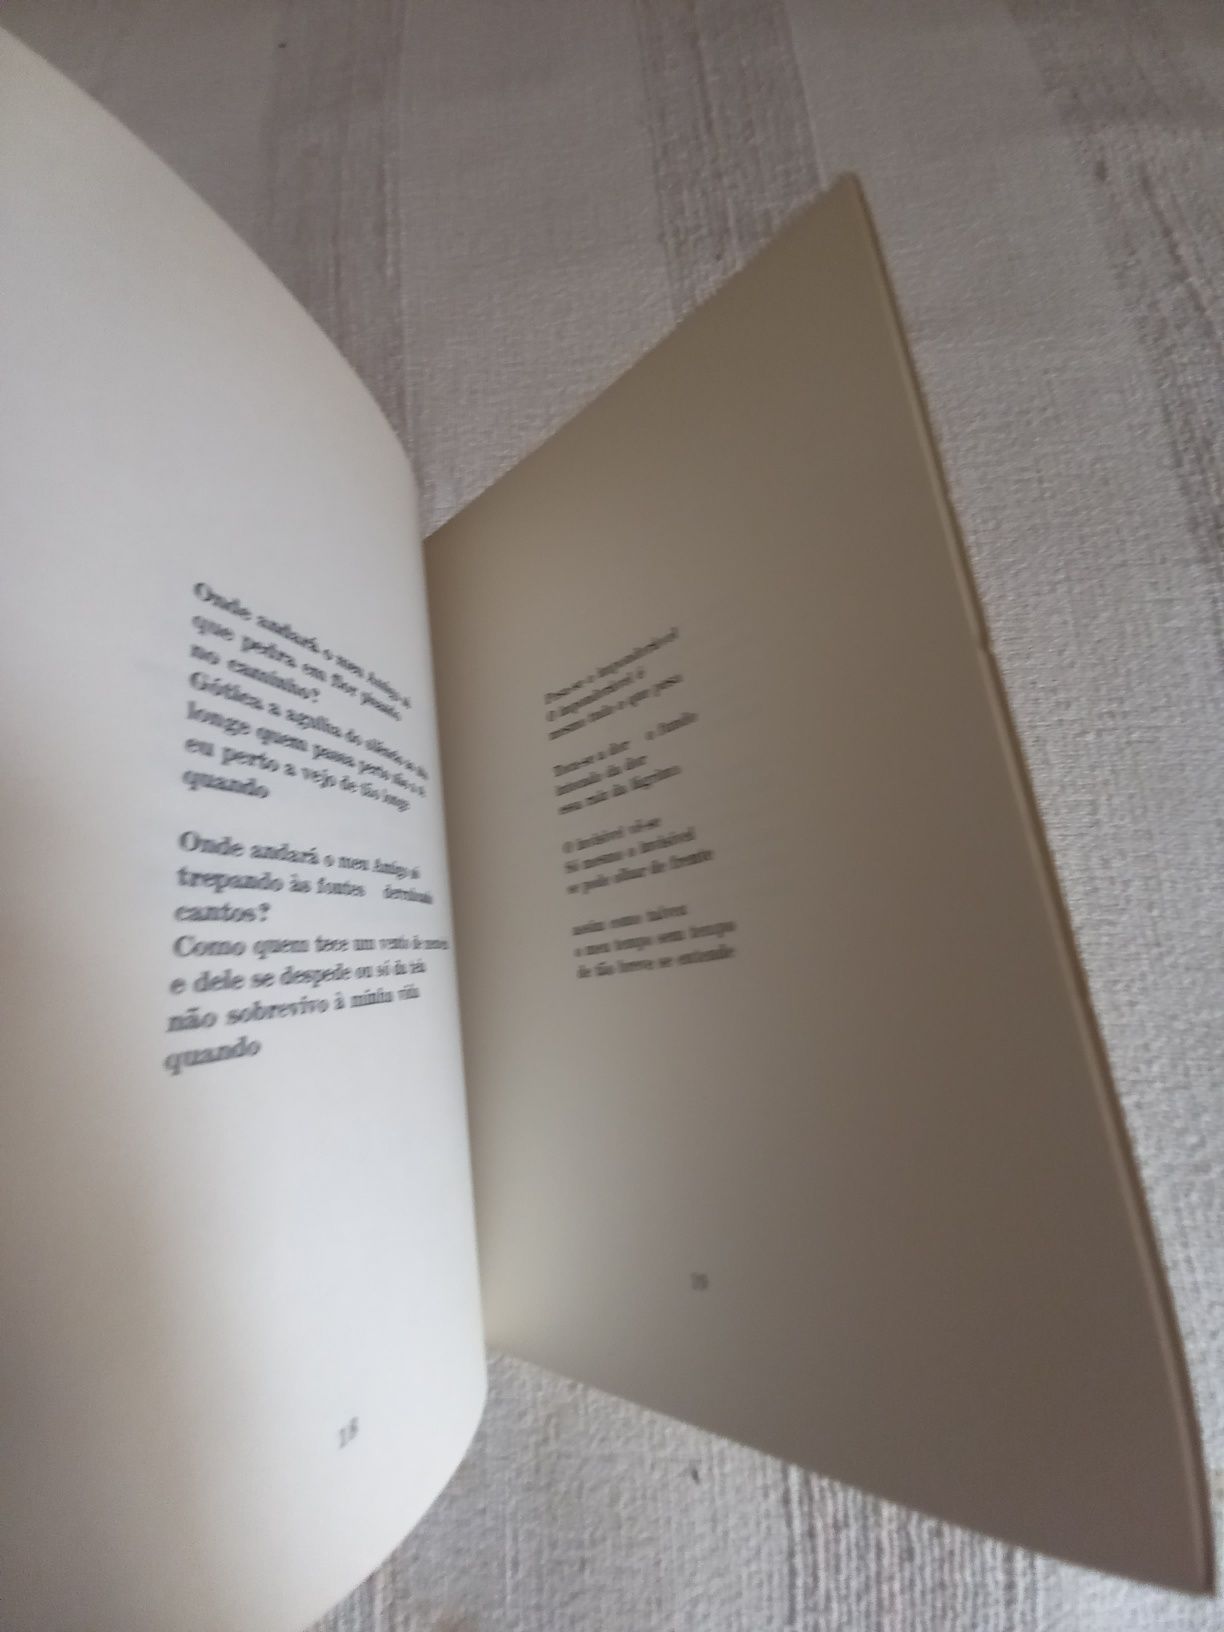 Poesia de Maria Alberta Menéres livro Os Mosquitos de Suburna